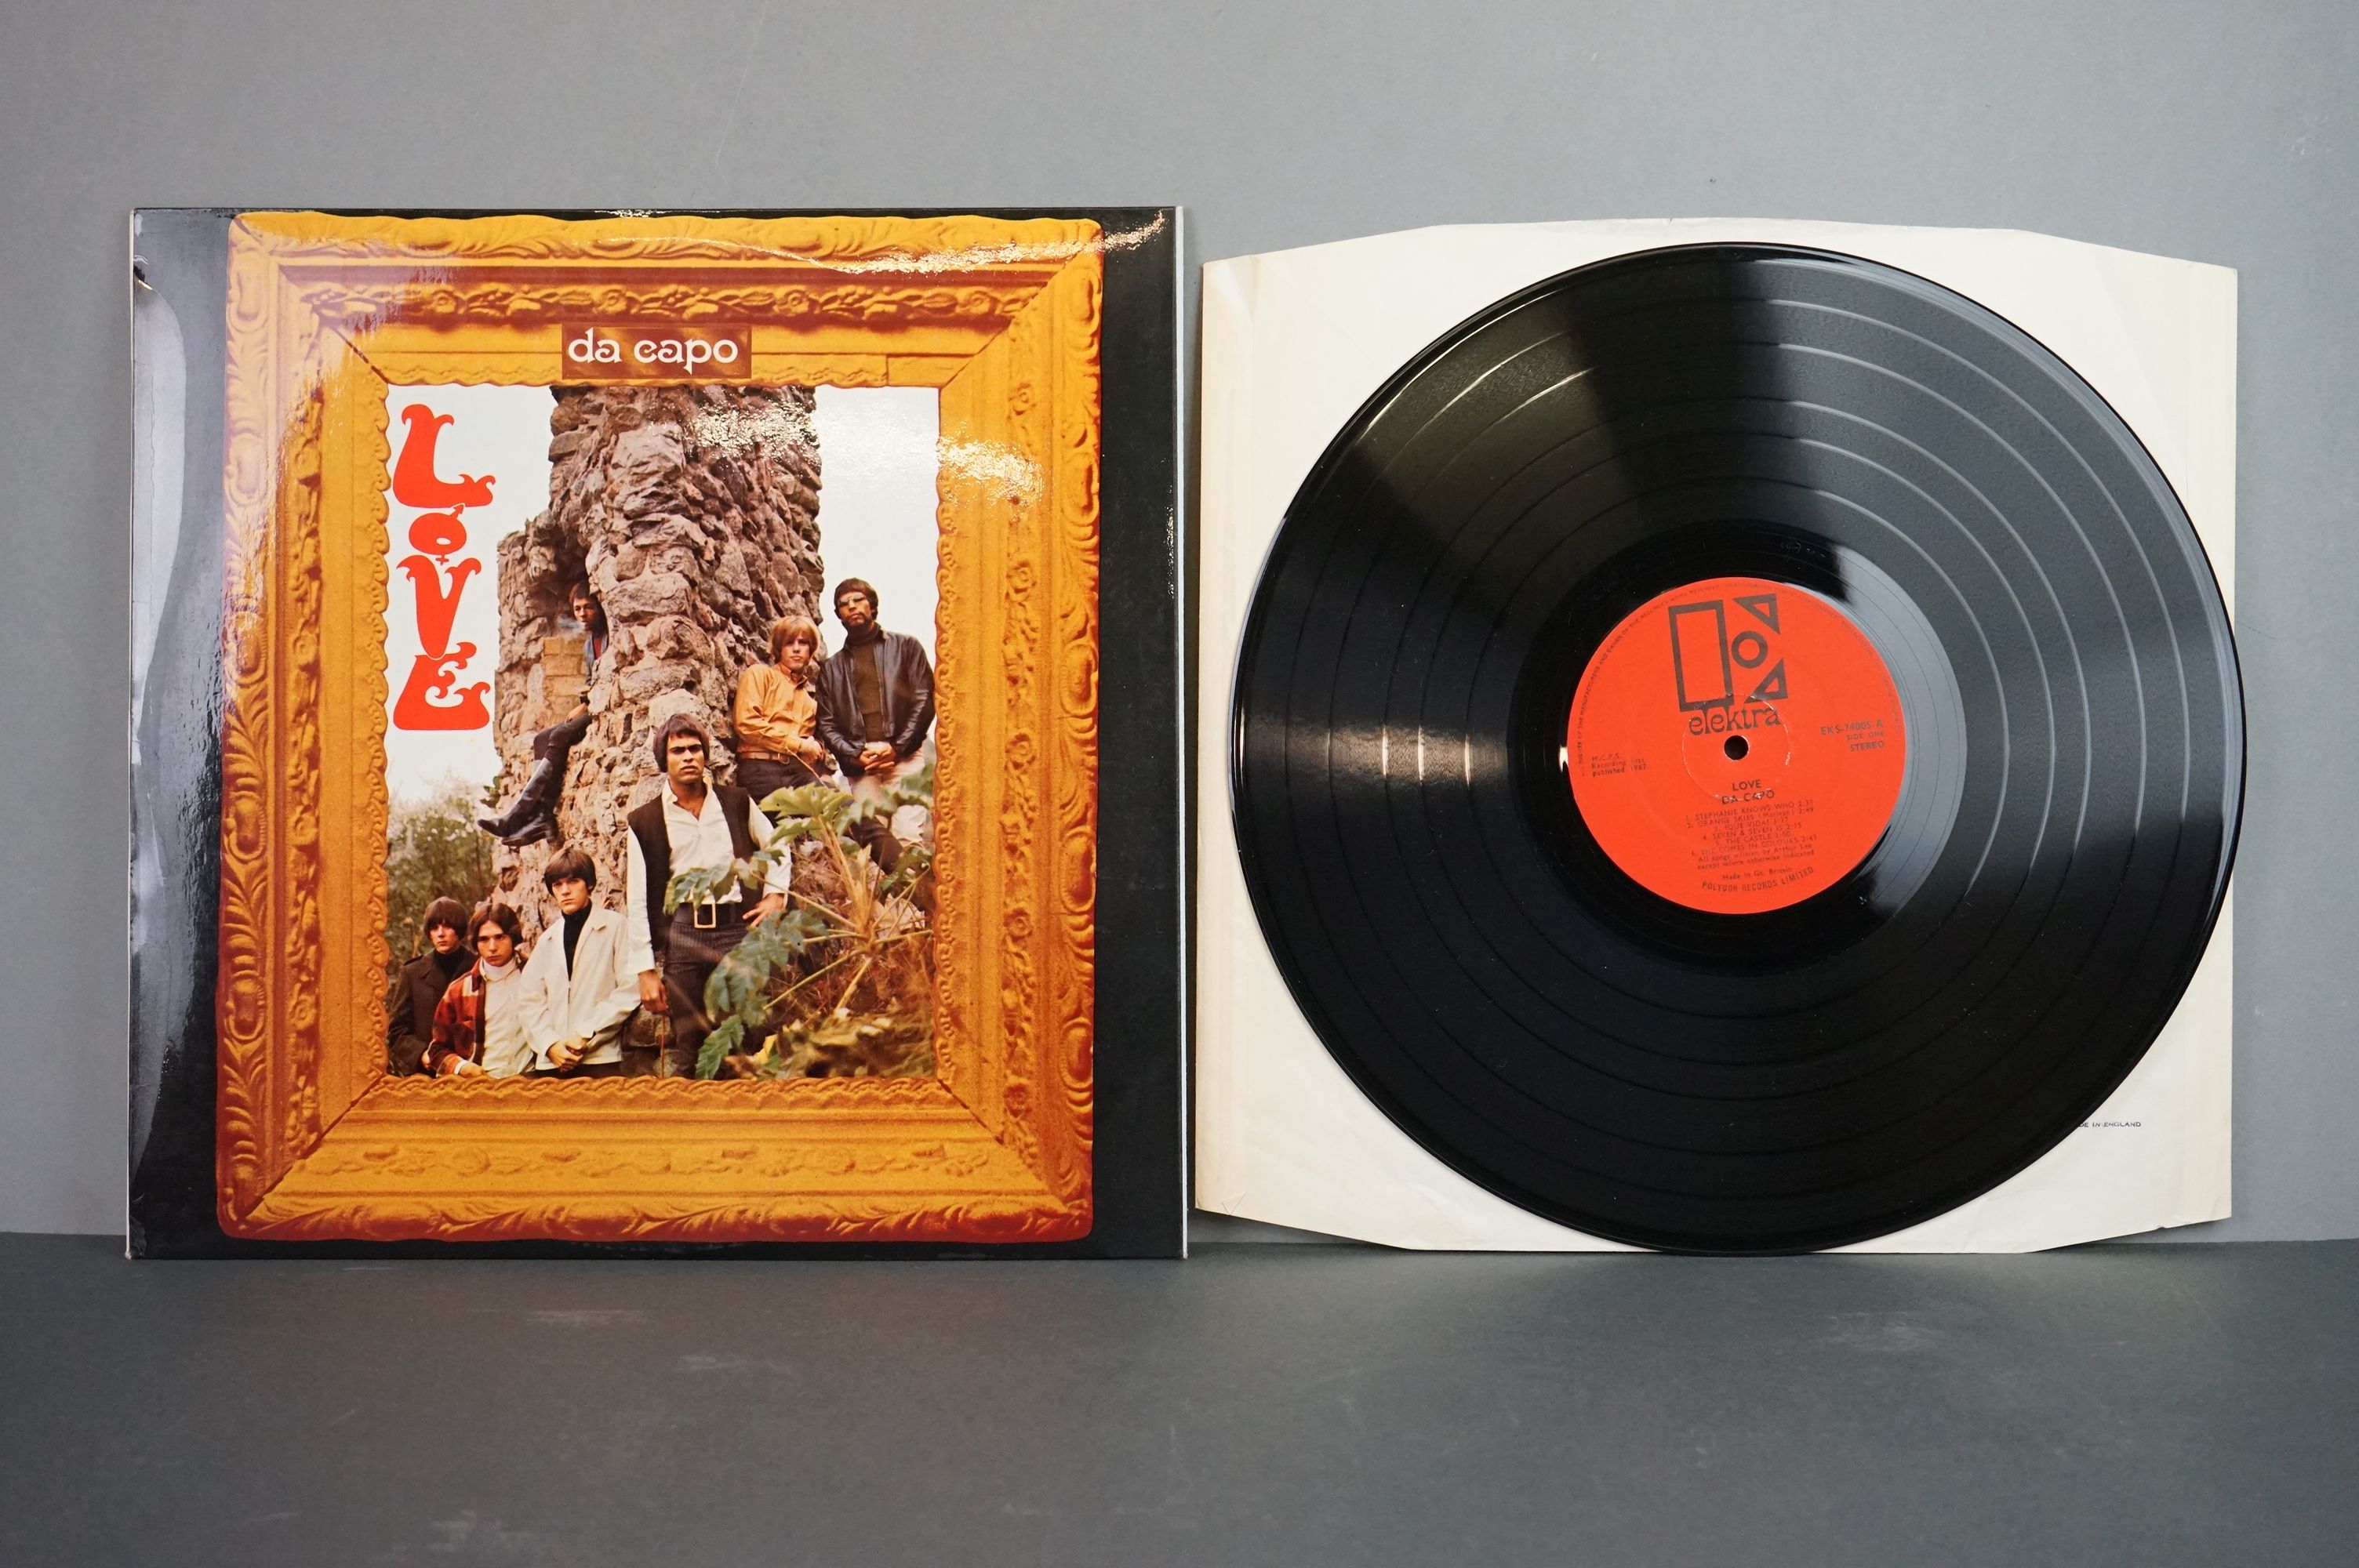 Vinyl - Love Da Capo EKS7005 orange / black label with 'Mad in Gt Britain. Polydor Records Limited - Image 2 of 4